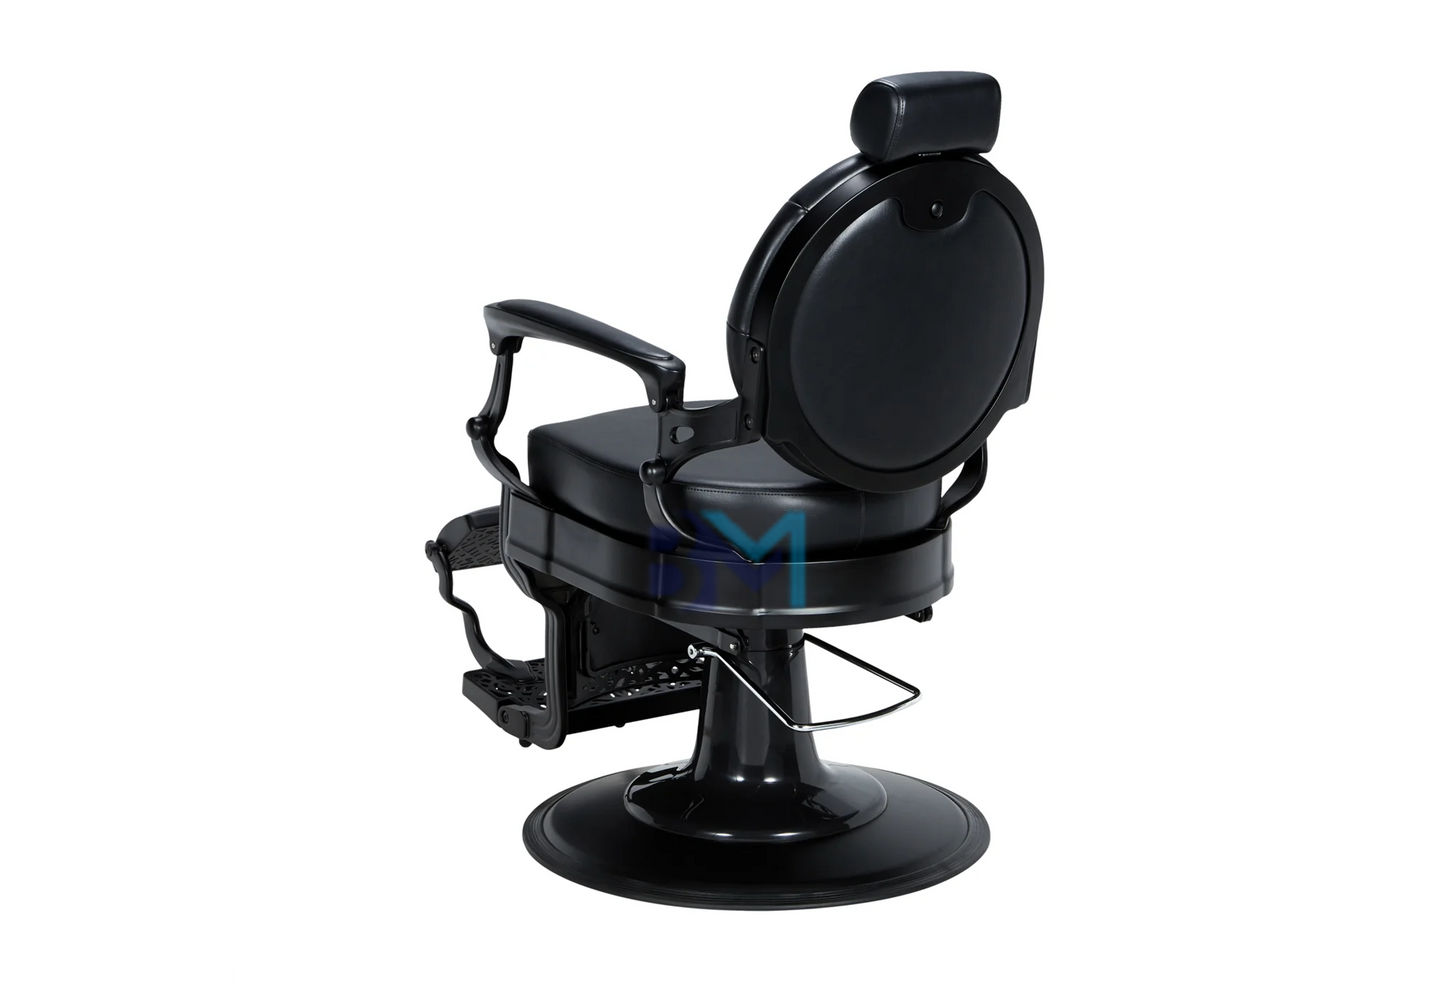 Black vintage barber chair